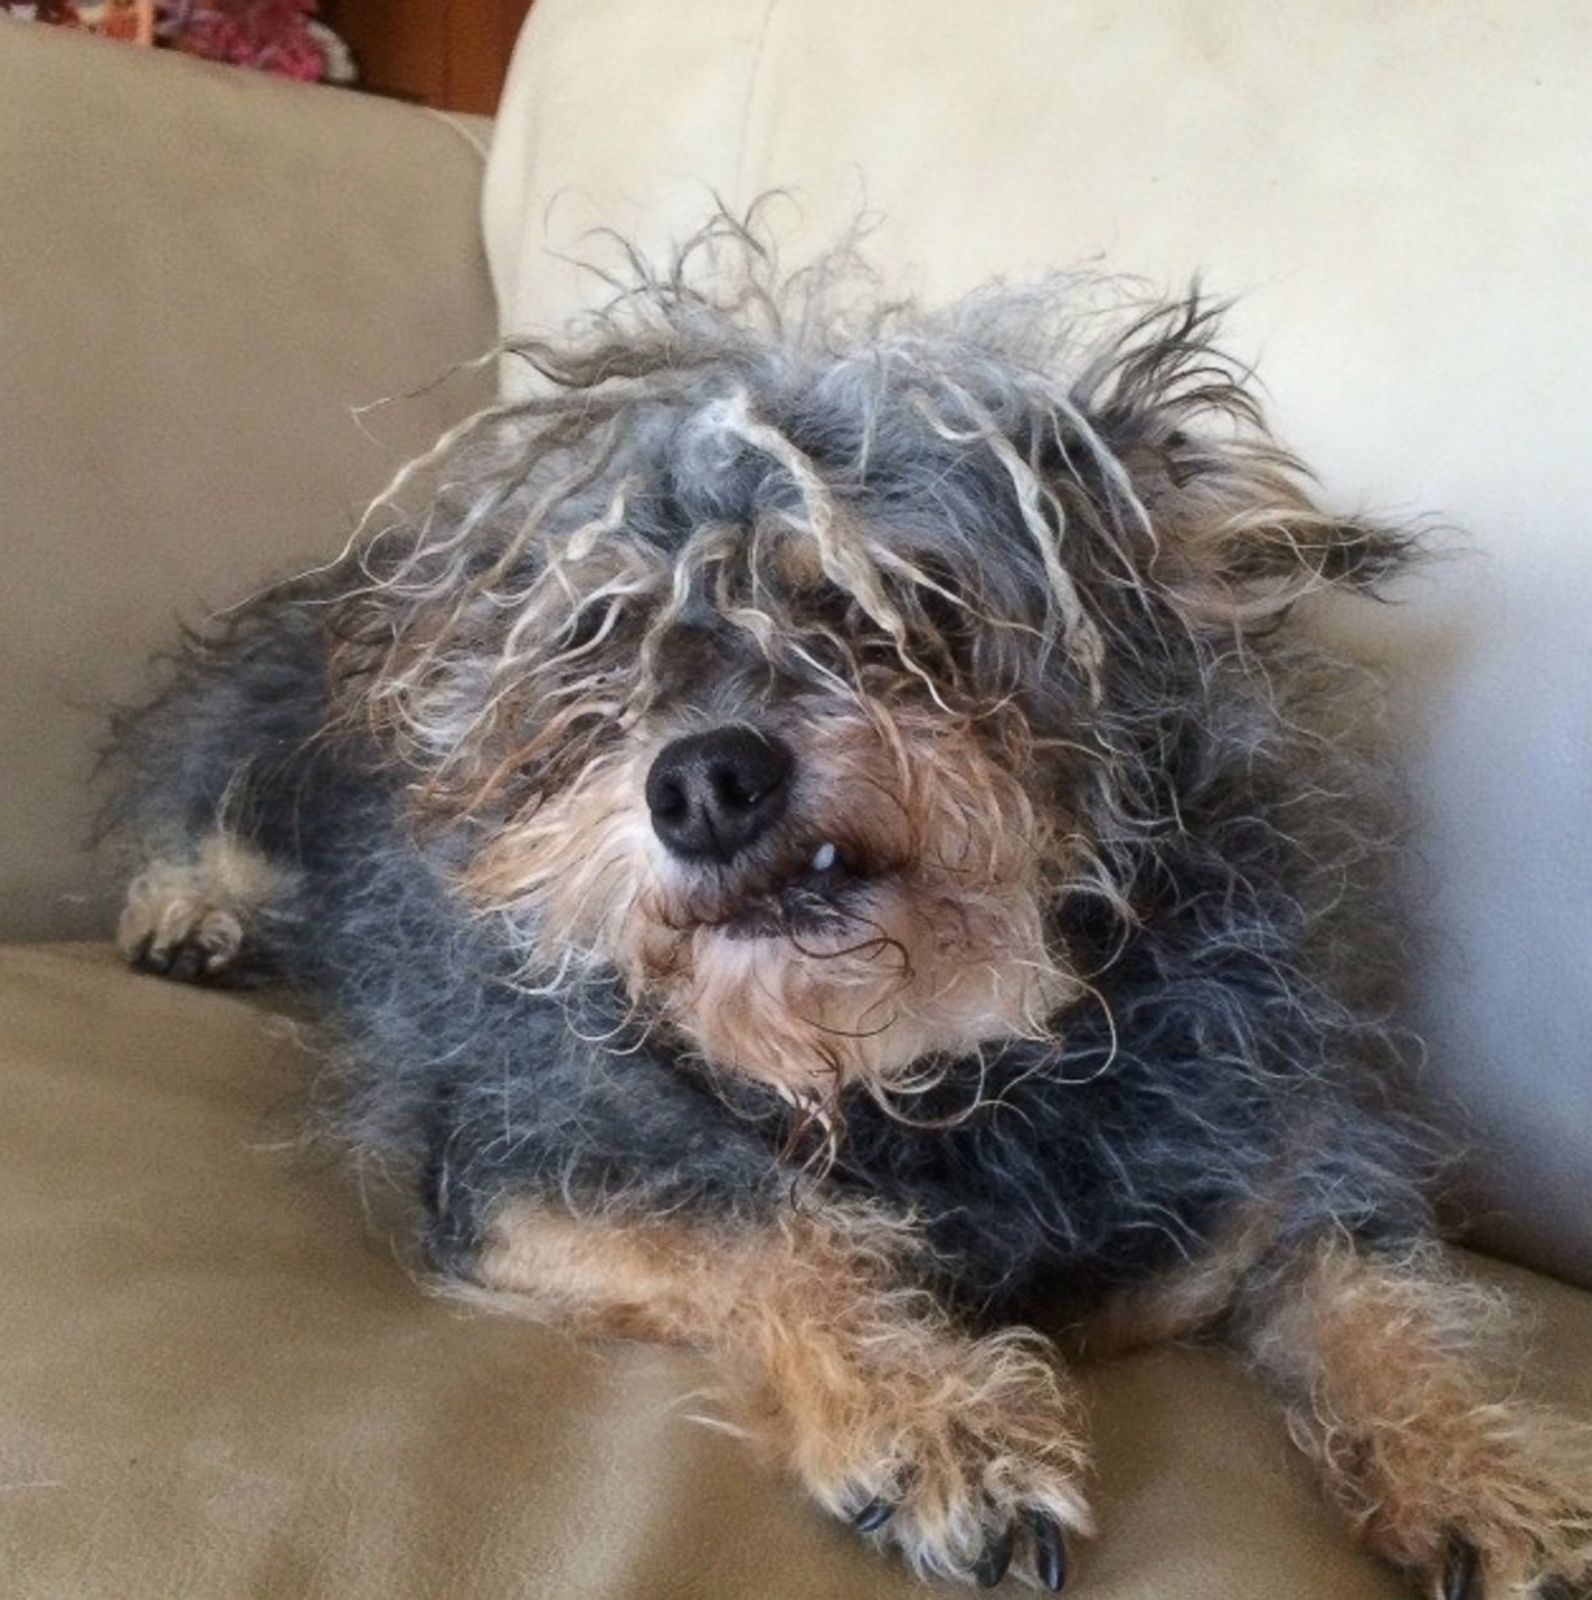 Meet the 'World's Ugliest Dog' Photos | Image #3 - ABC News